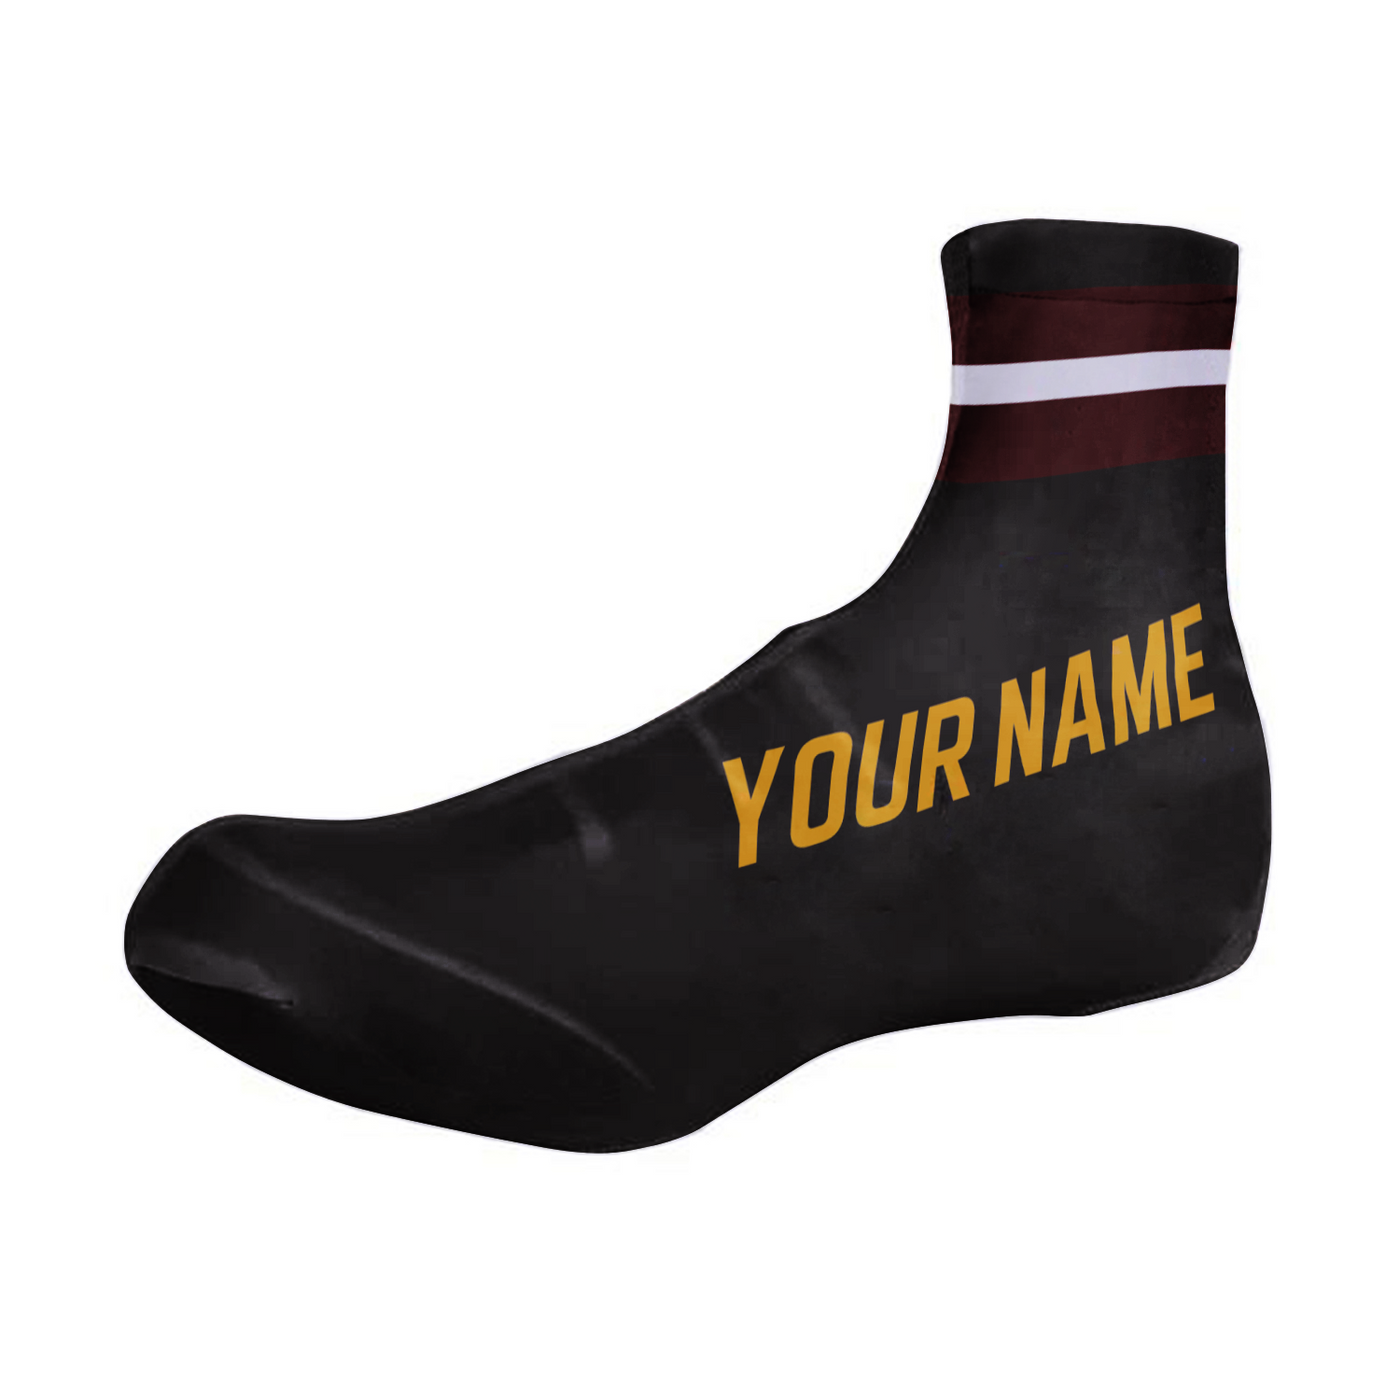 Customized Washington Team Cycling Shoe Covers